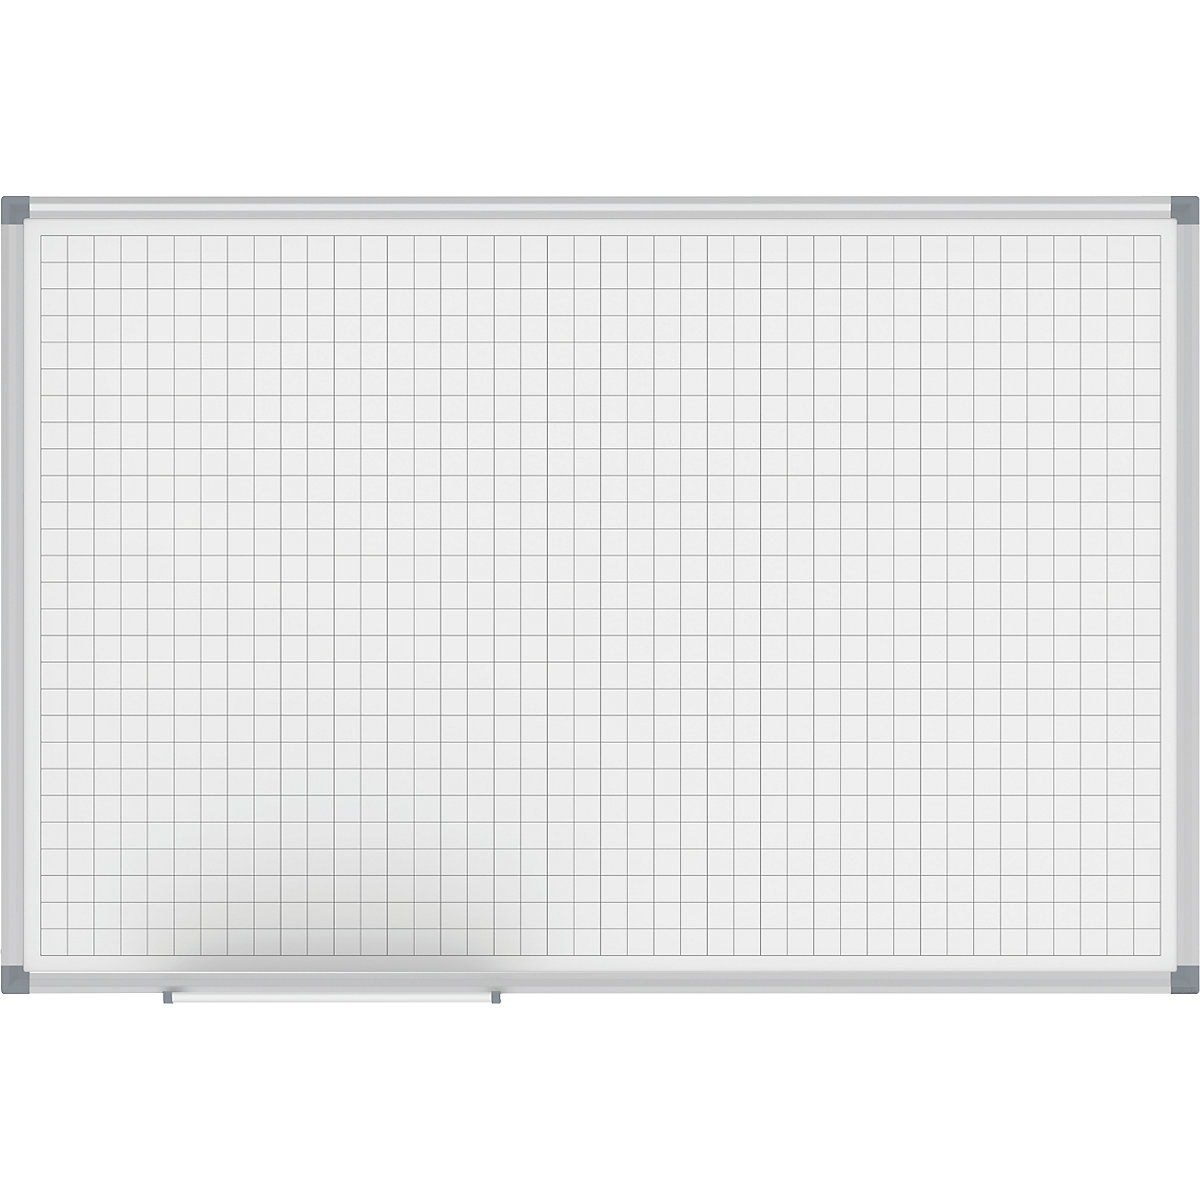 MAULstandard grid board, white – MAUL